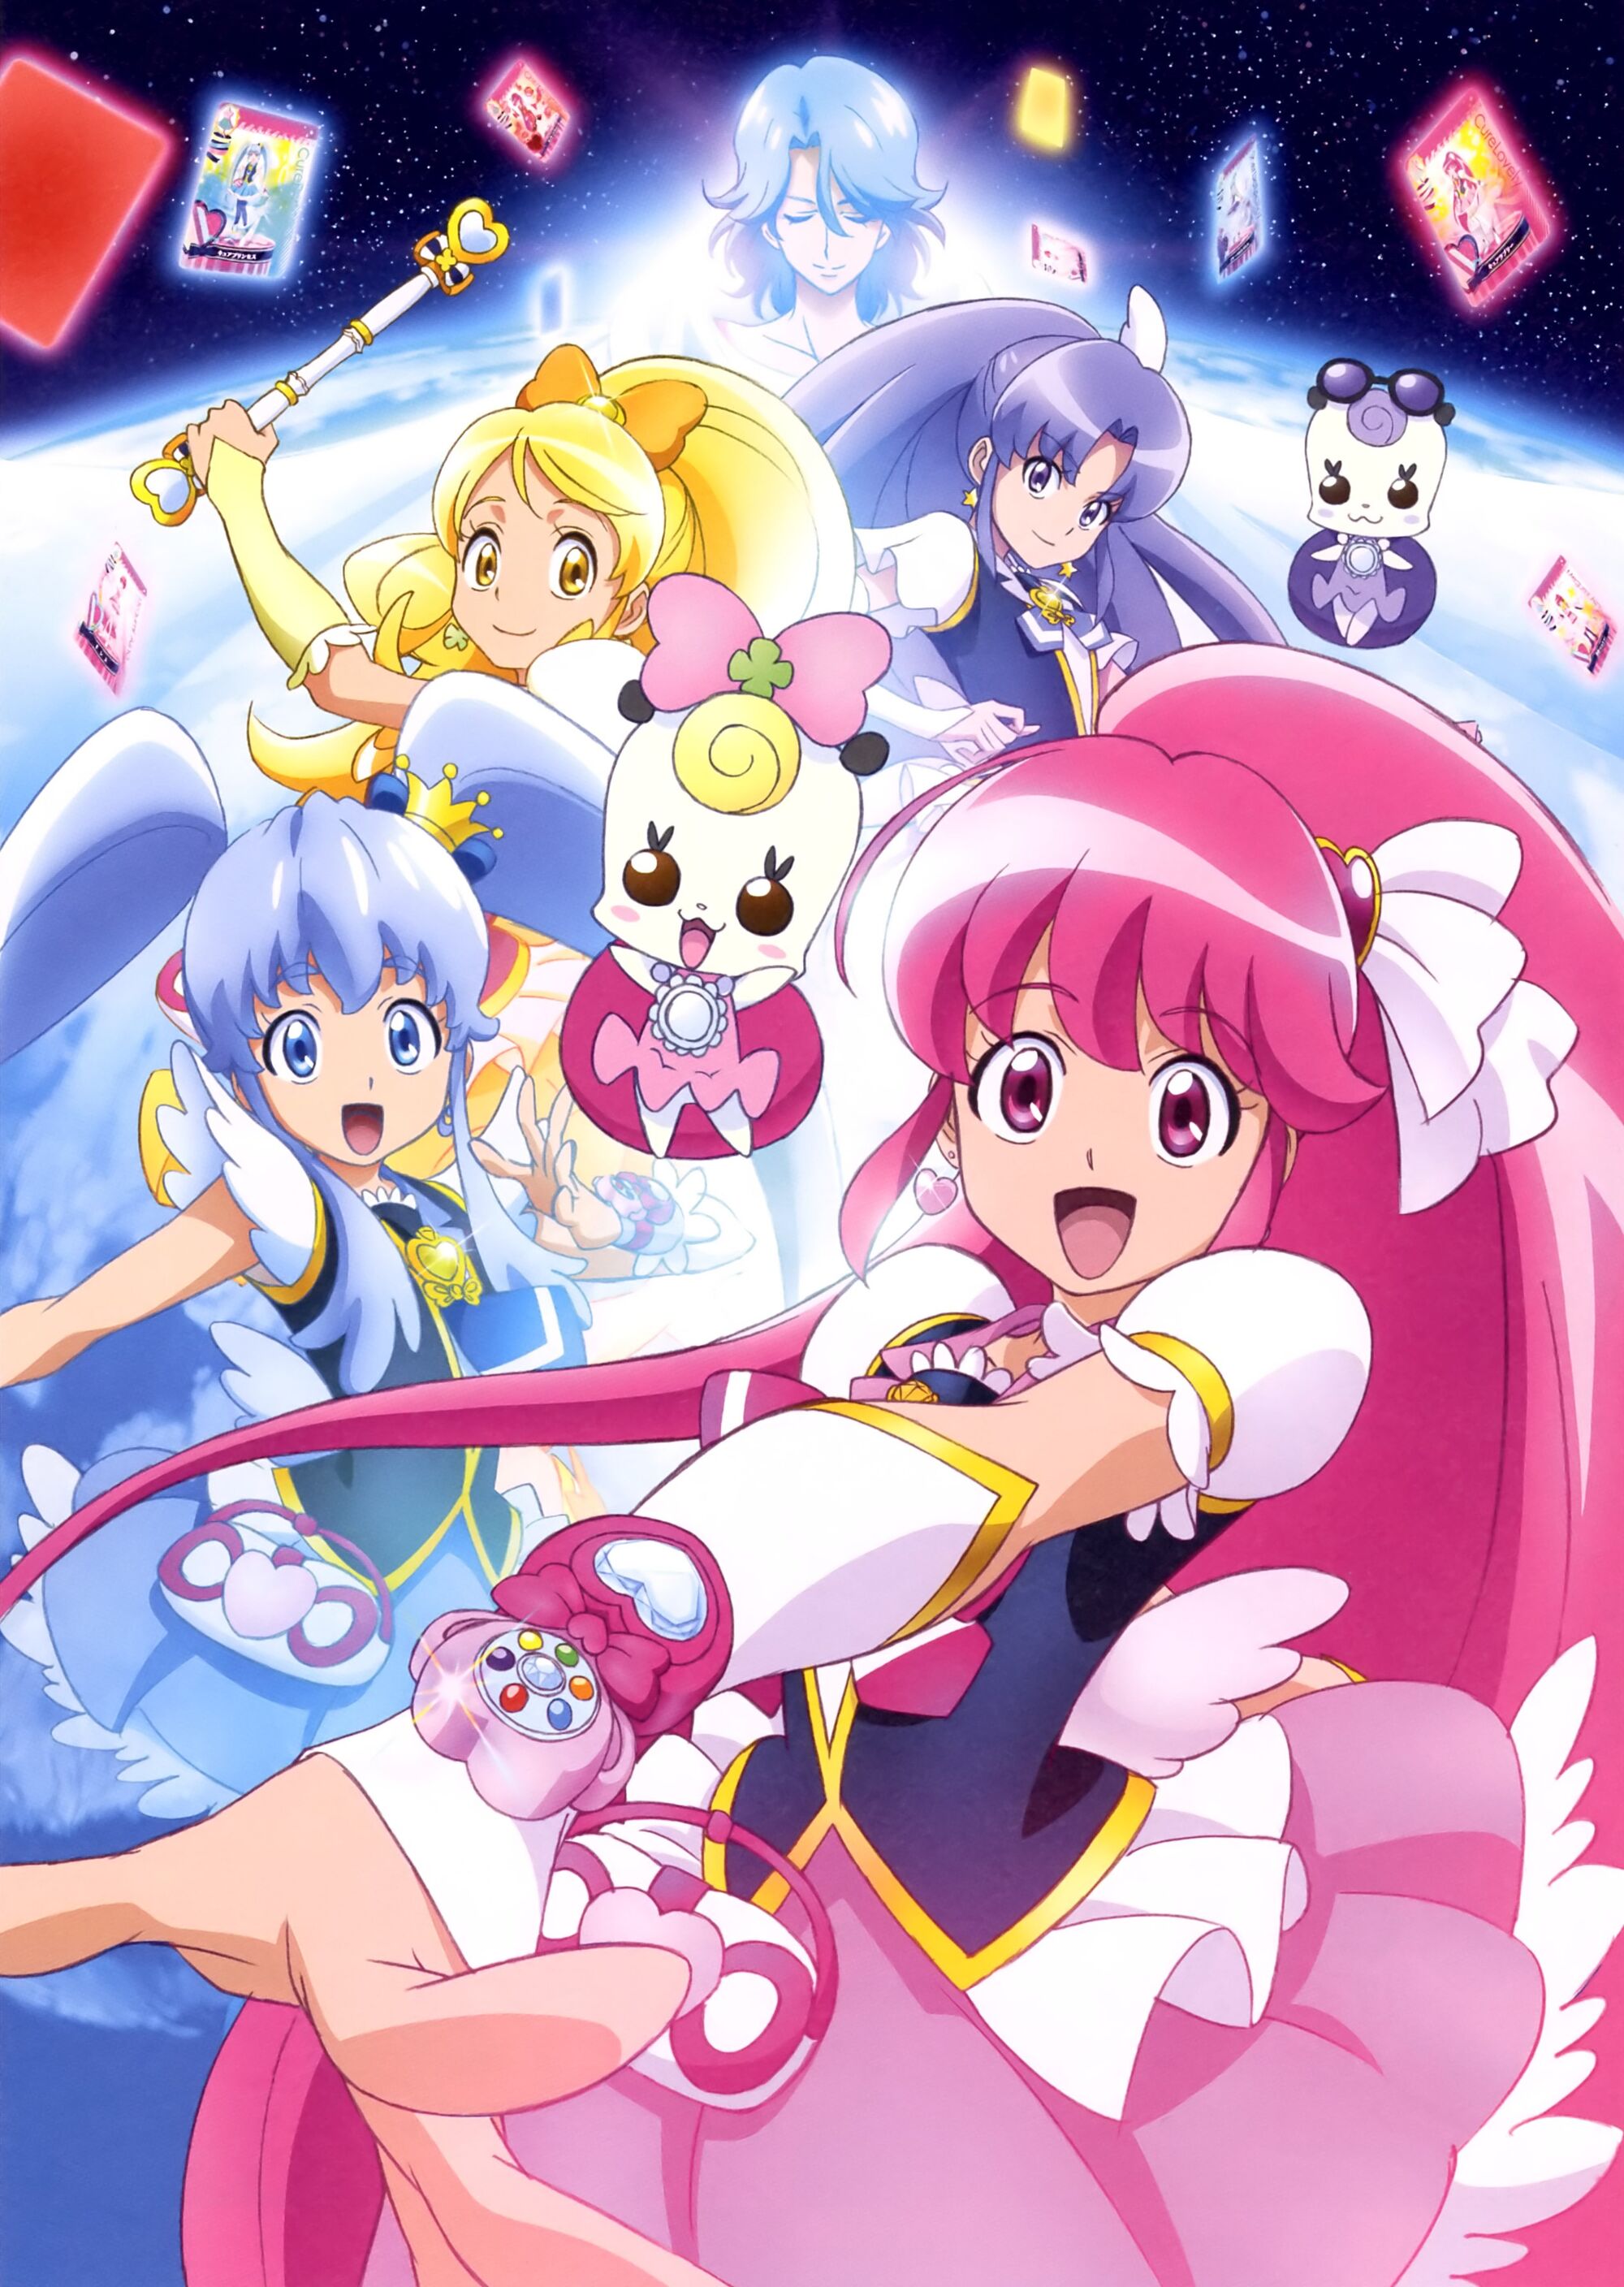 Shirayuki Himeimage Gallery Pretty Cure Wiki Fandom Powered By Wikia 6785